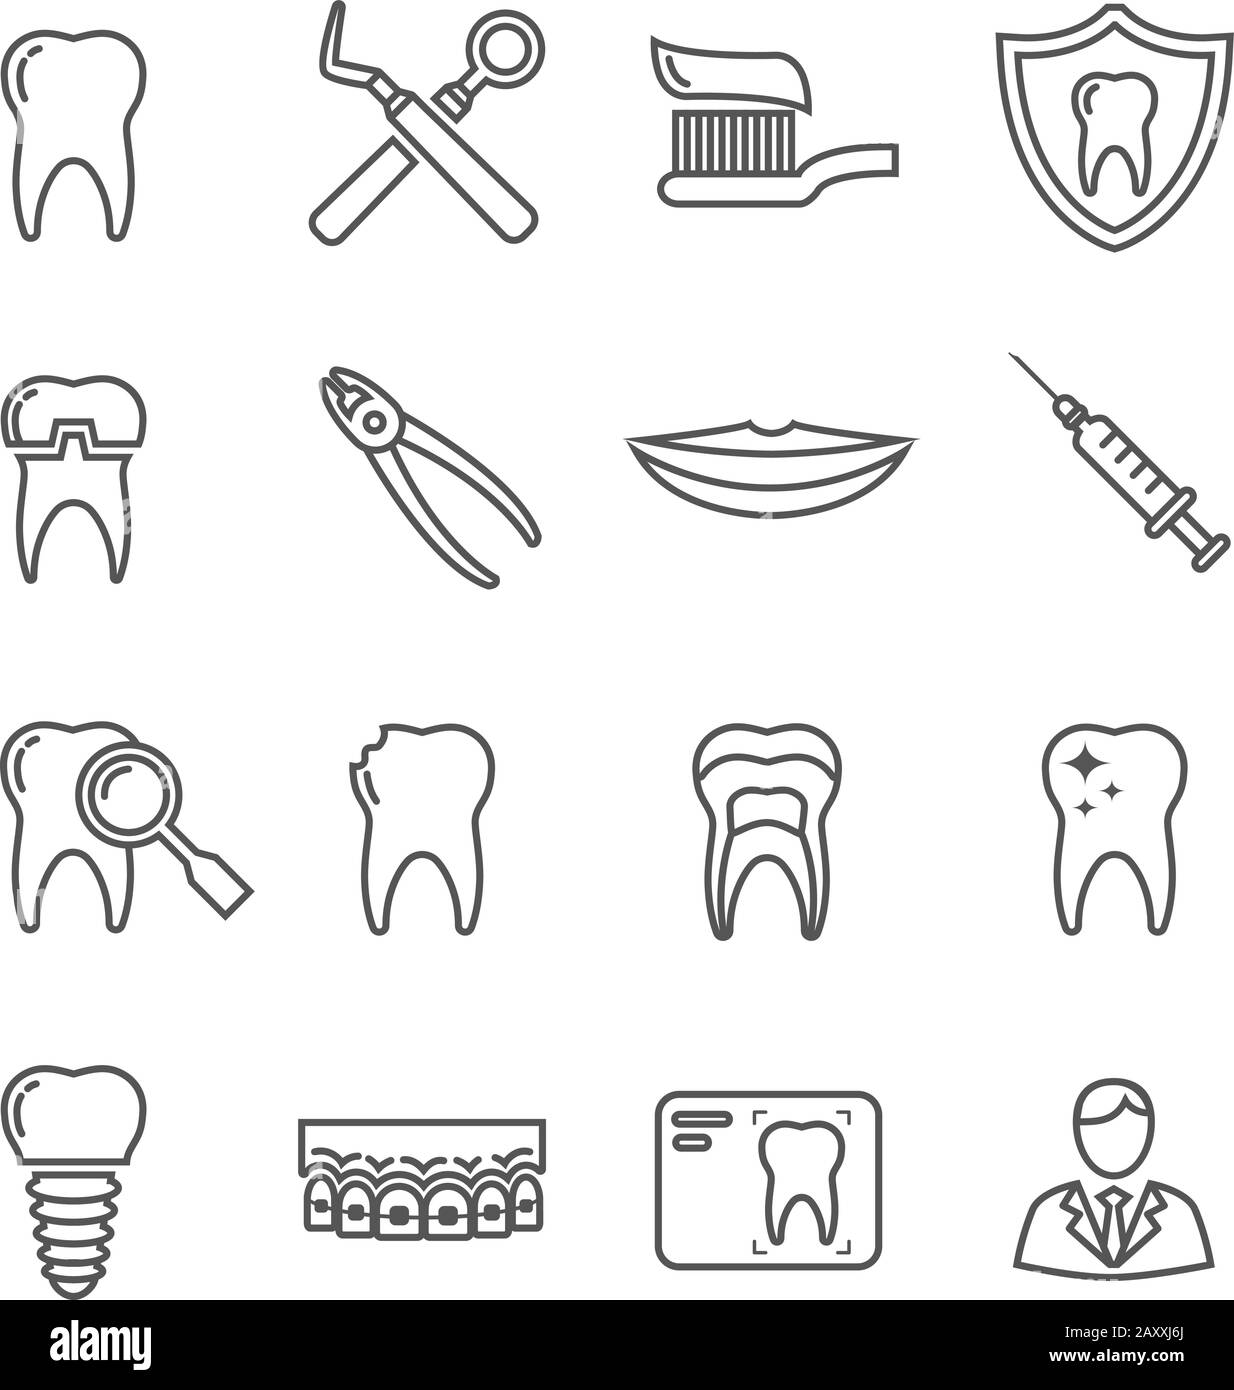 Zähne, medizinische Leitungssymbole der Zahnmedizin. Instrumente Zahnmedizin Medizin, Zahnmedizin medizinische Stomatologie, Zahnheilkunde Medizin, Zahnschutz. Vect Stock Vektor